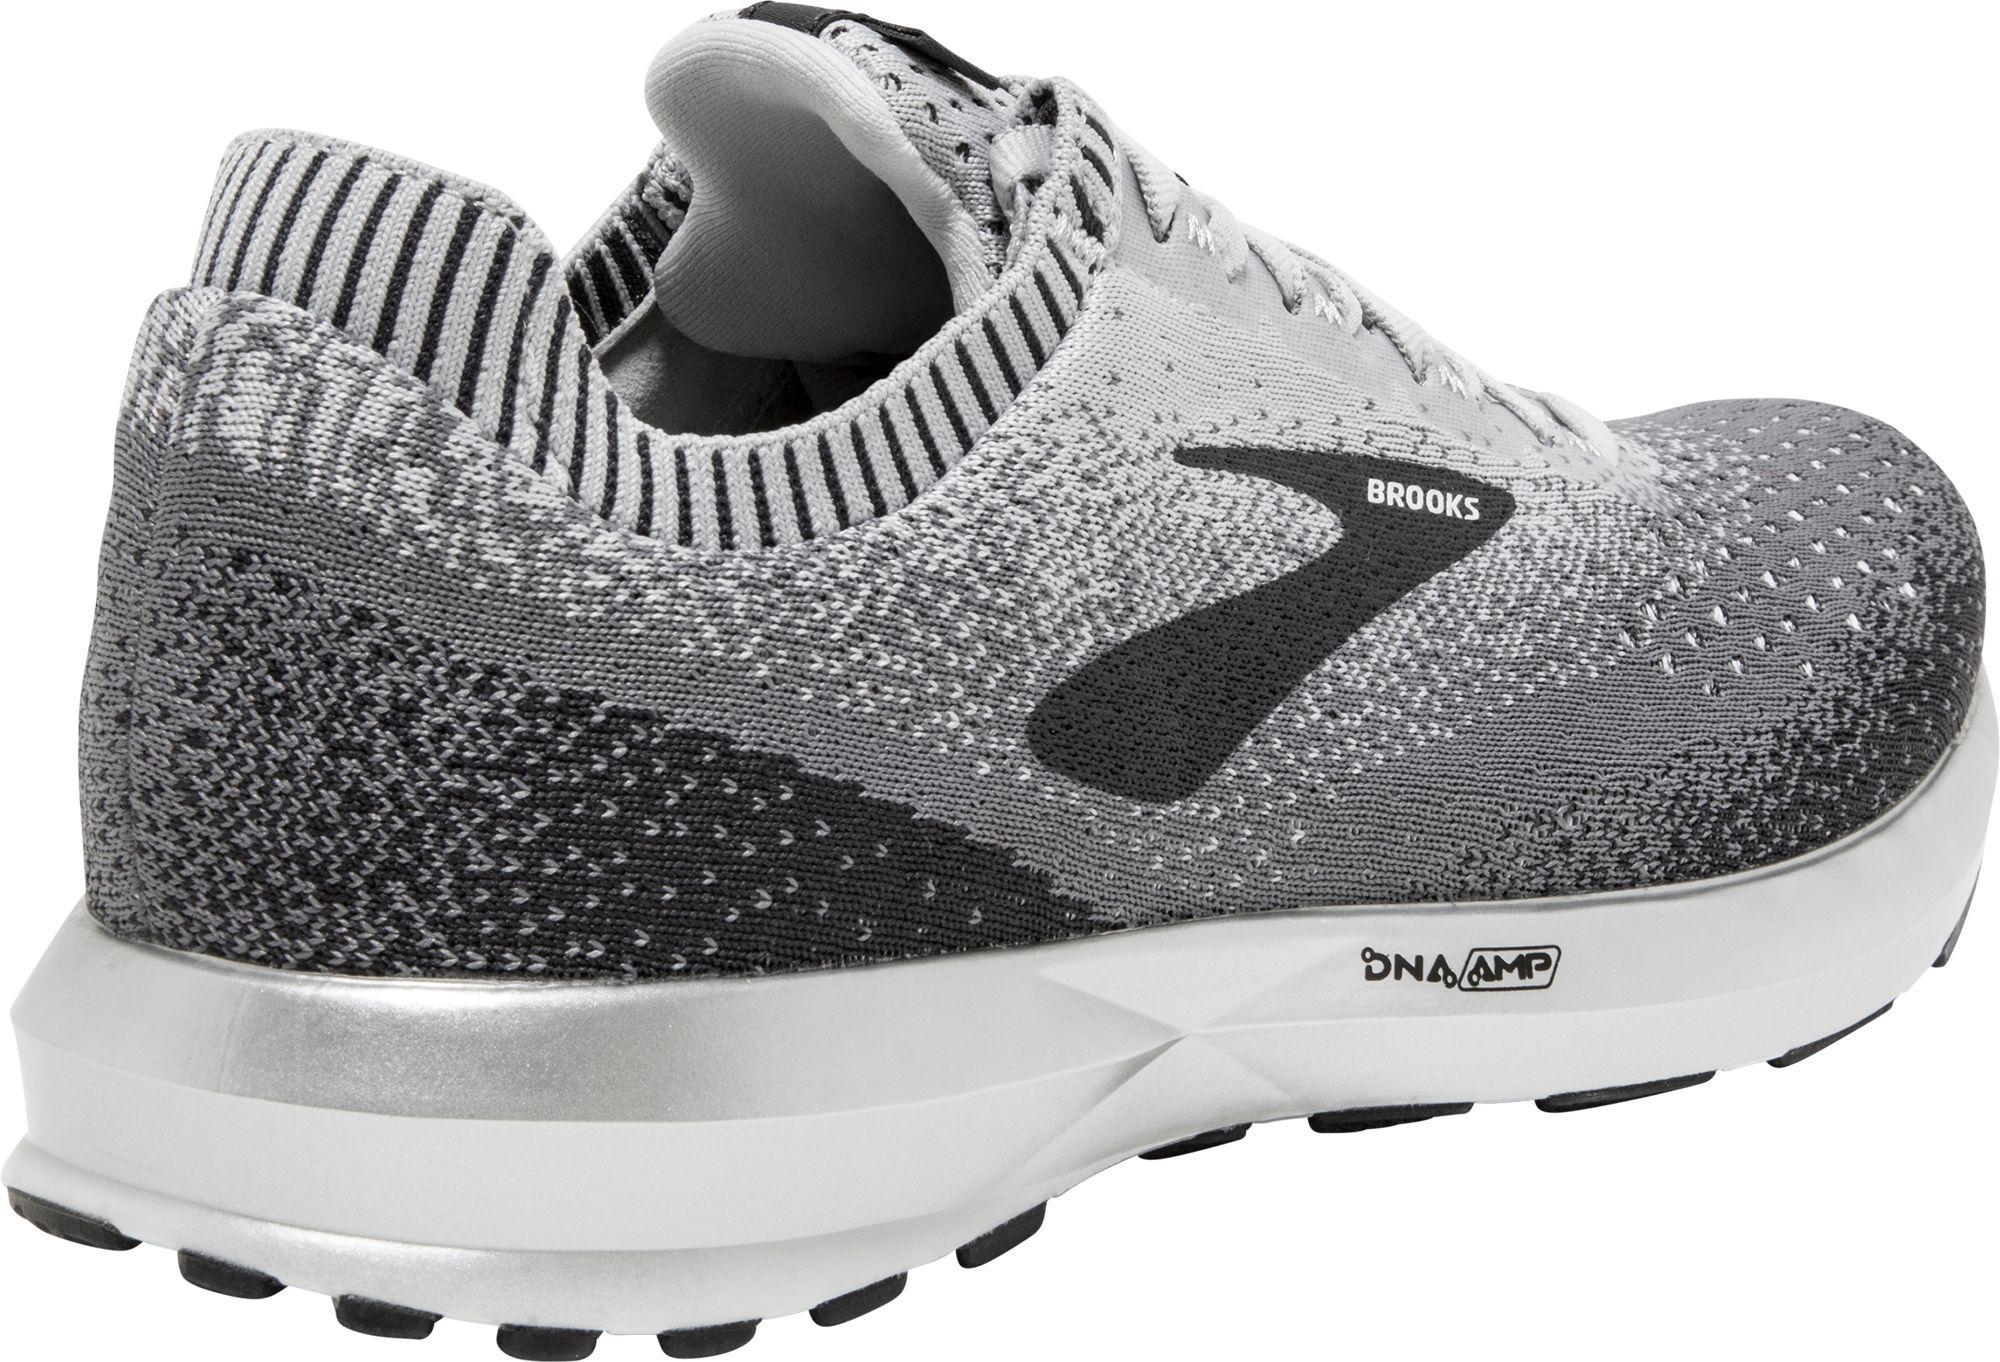 Brooks Levitate 2 Running Shoes in Black/Grey/Silver Metallic (Gray) - Lyst